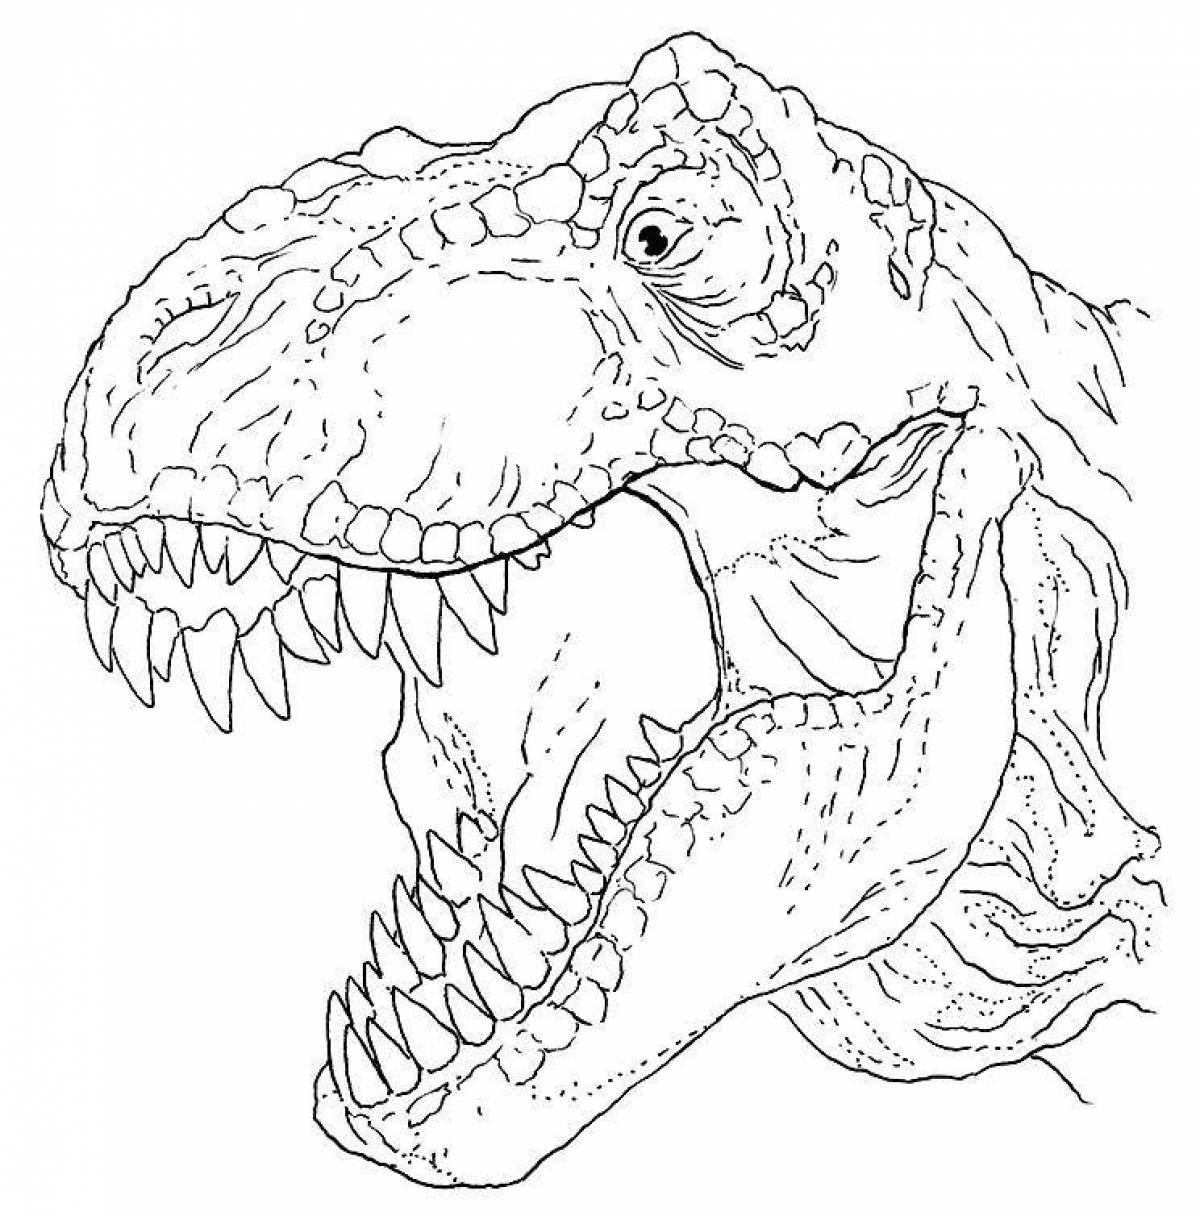 Courageous tarbosaurus coloring book for kids